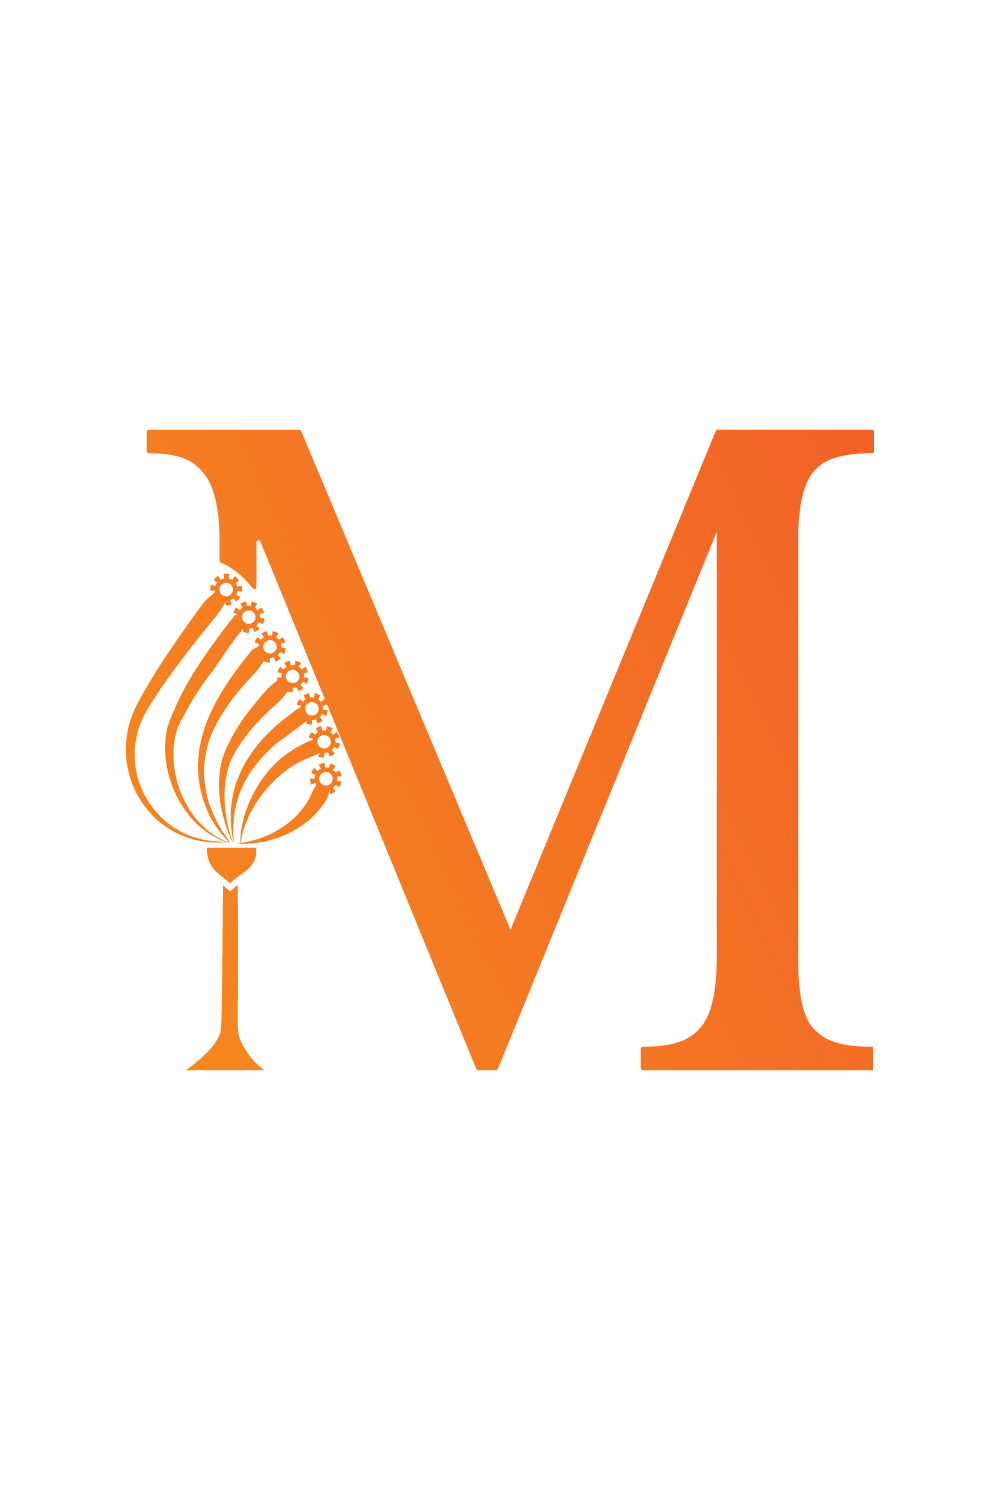 Luxury M Letters logo design vector template icon design M logo design Orange color image design M logo design best company royalty pinterest preview image.